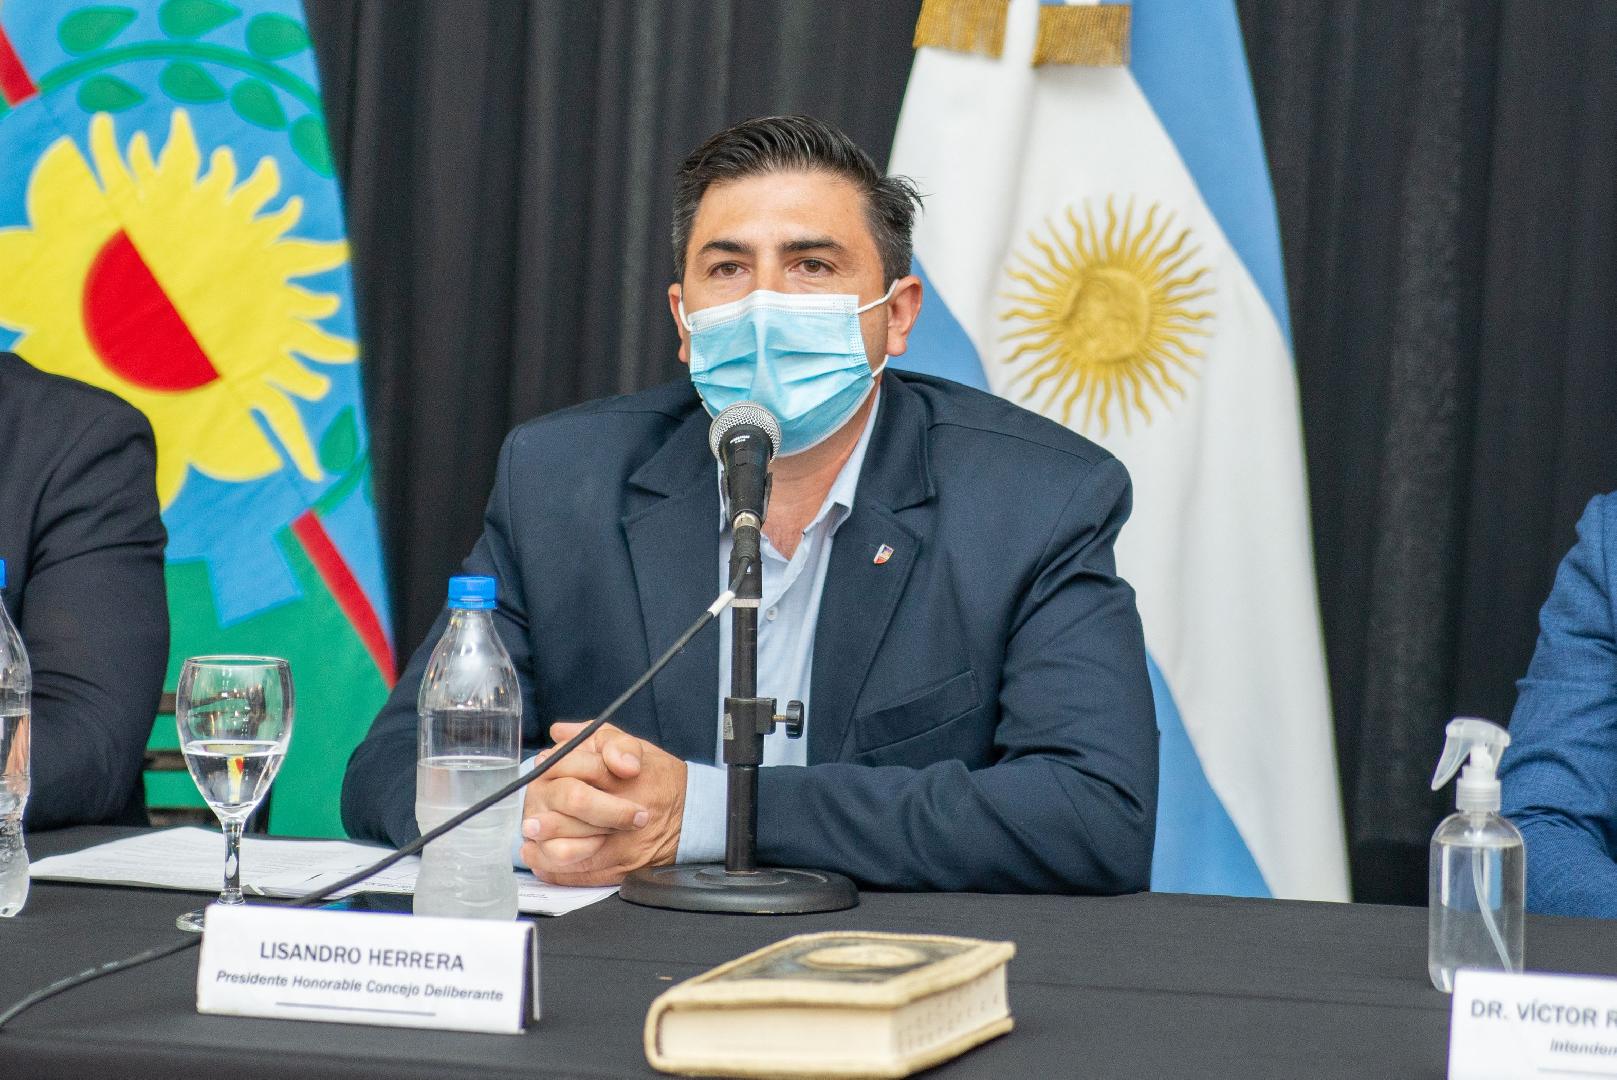 Lisandro Herrera seguirÃ¡ siendo el Presidente del HCD